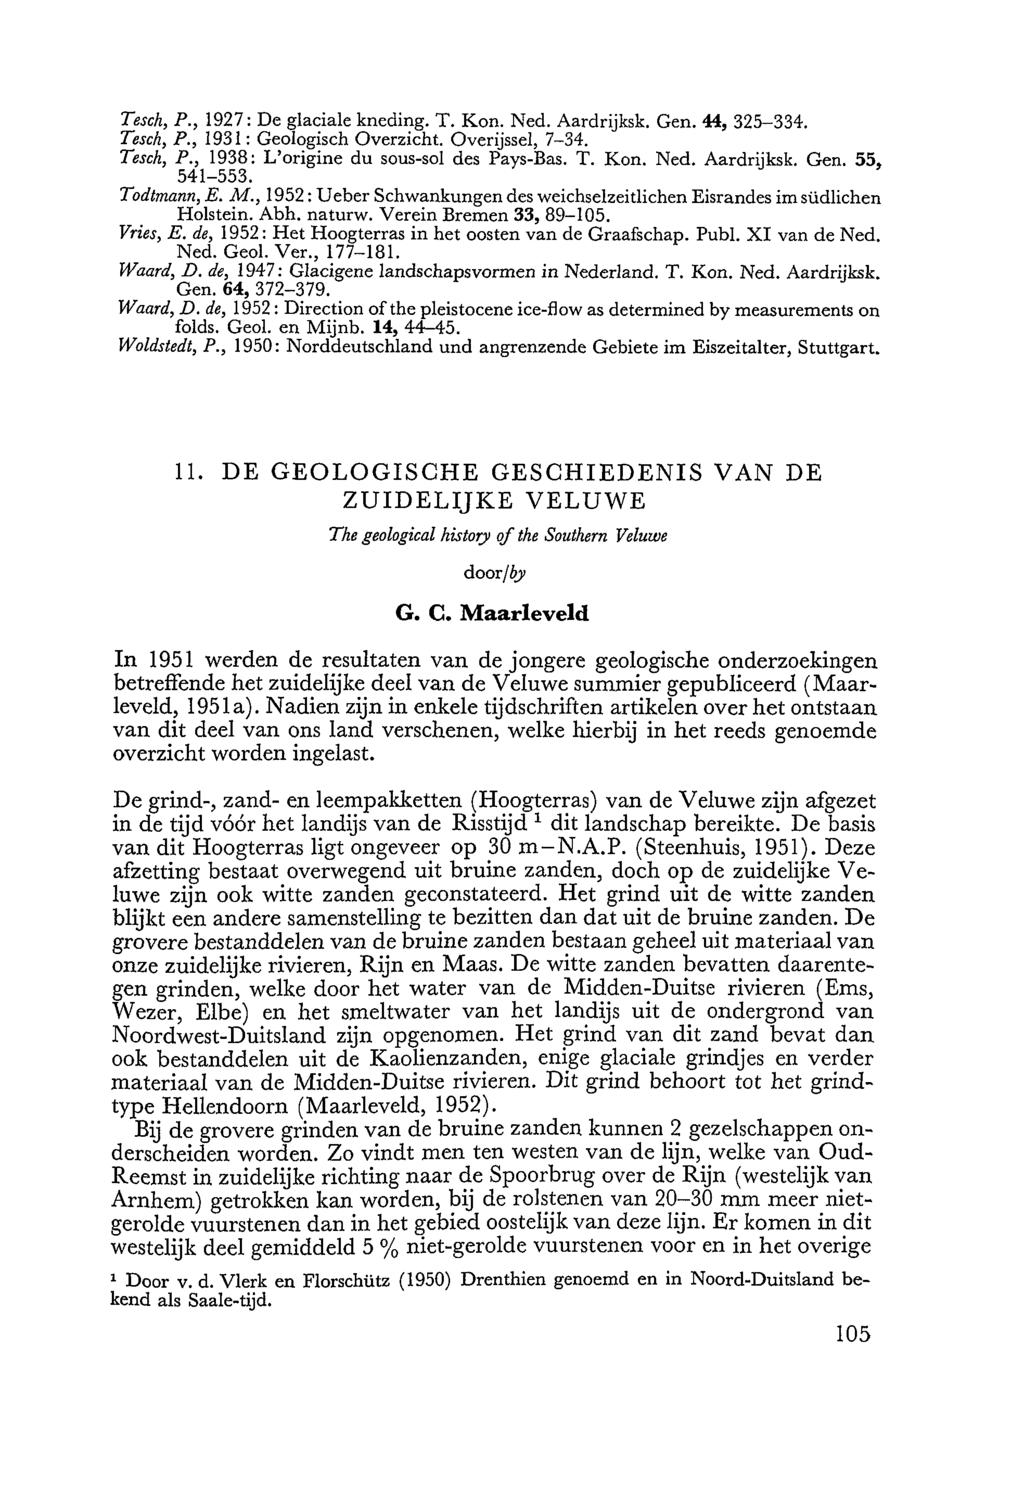 Tesch, P., 1927: De glaciale kneding. T. Kon. Ned. Aardrijksk. Gen. 44, 325-334. Tesch, P., 1931 : Geologisch Overzicht. Overijssel, 7-34. Tesch, P., 1938: L'origine du sous-sol des Pays-Bas. T. Kon. Ned. Aardrijksk. Gen. 55, 541-553.